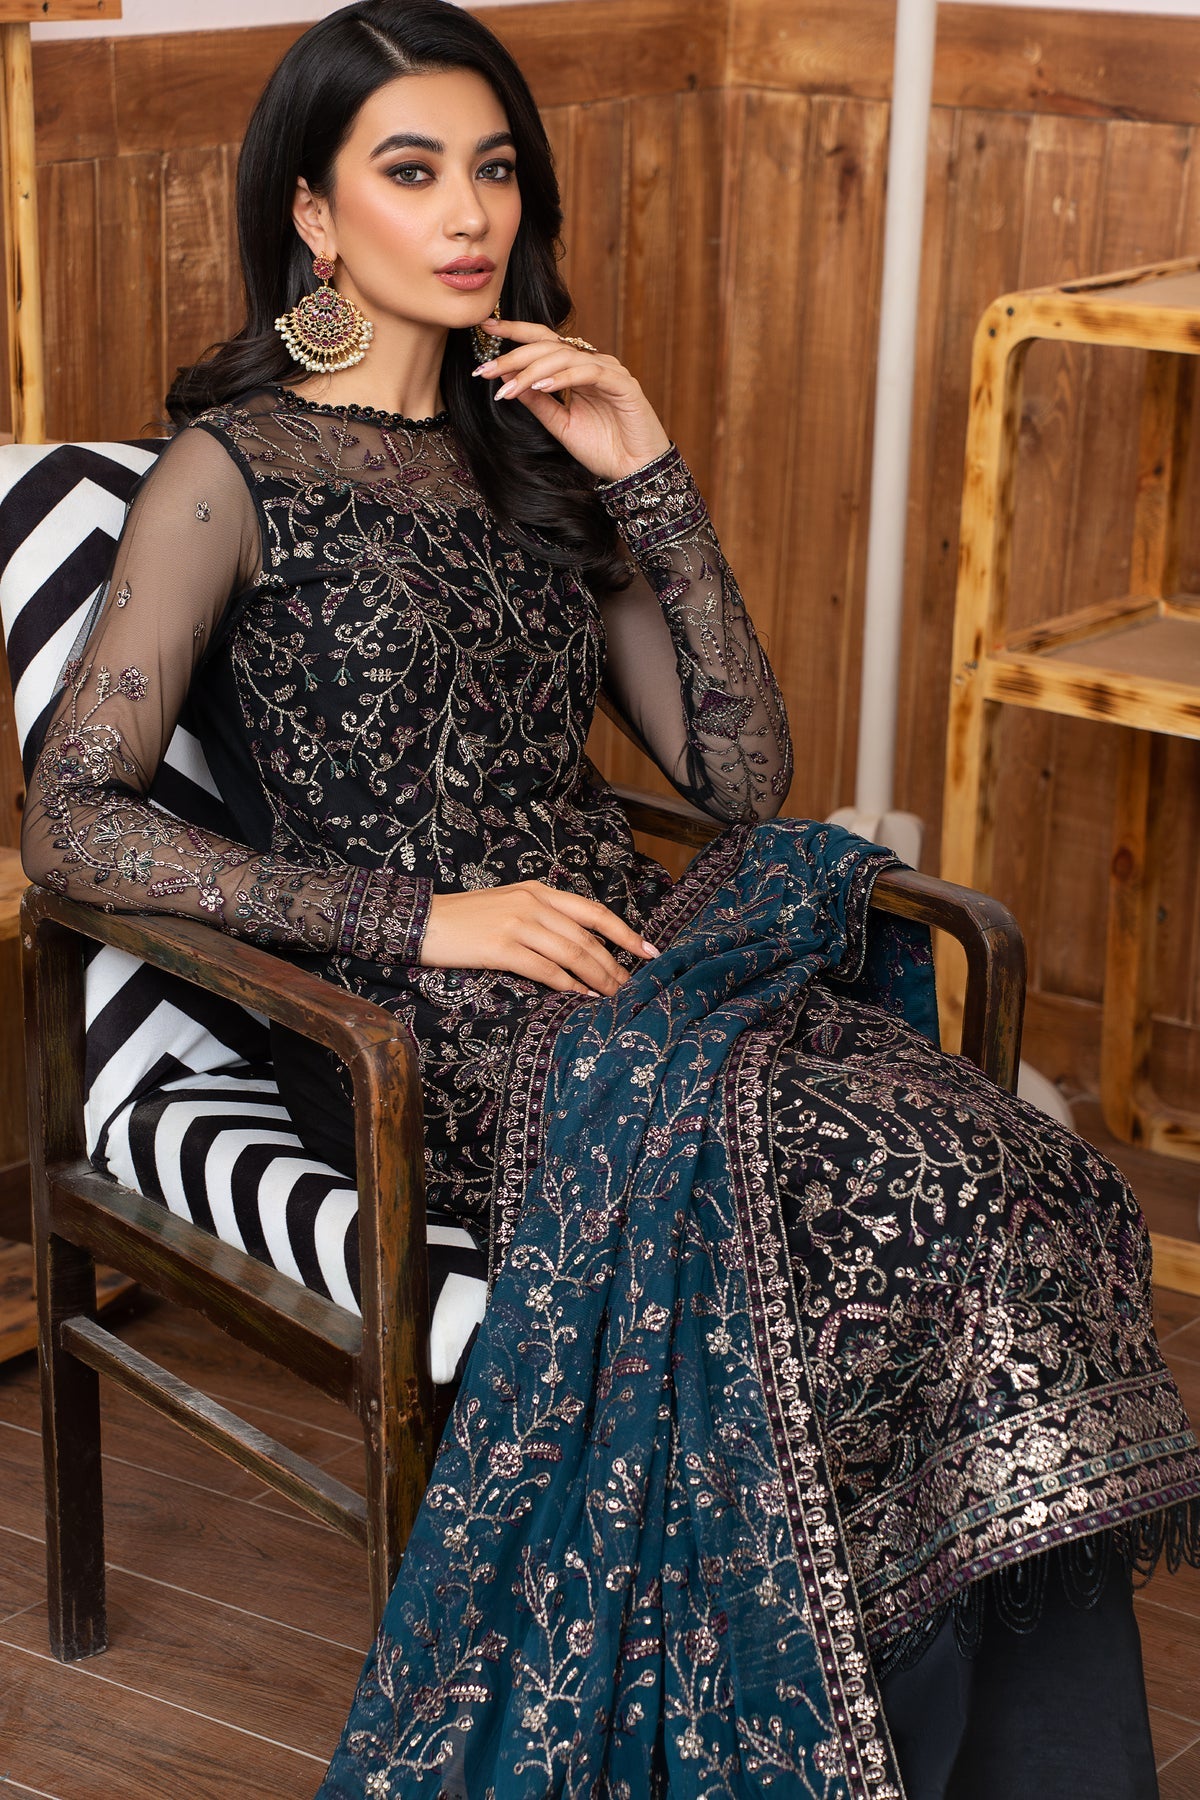 Shop Now, ZIMMEL - ZLM-02 - Meeral Luxury Formals 2023 - Zarif - Shahana Collection UK - Wedding and Bridal Dresses - Pakistani Dresses in UAE - Shahana UK